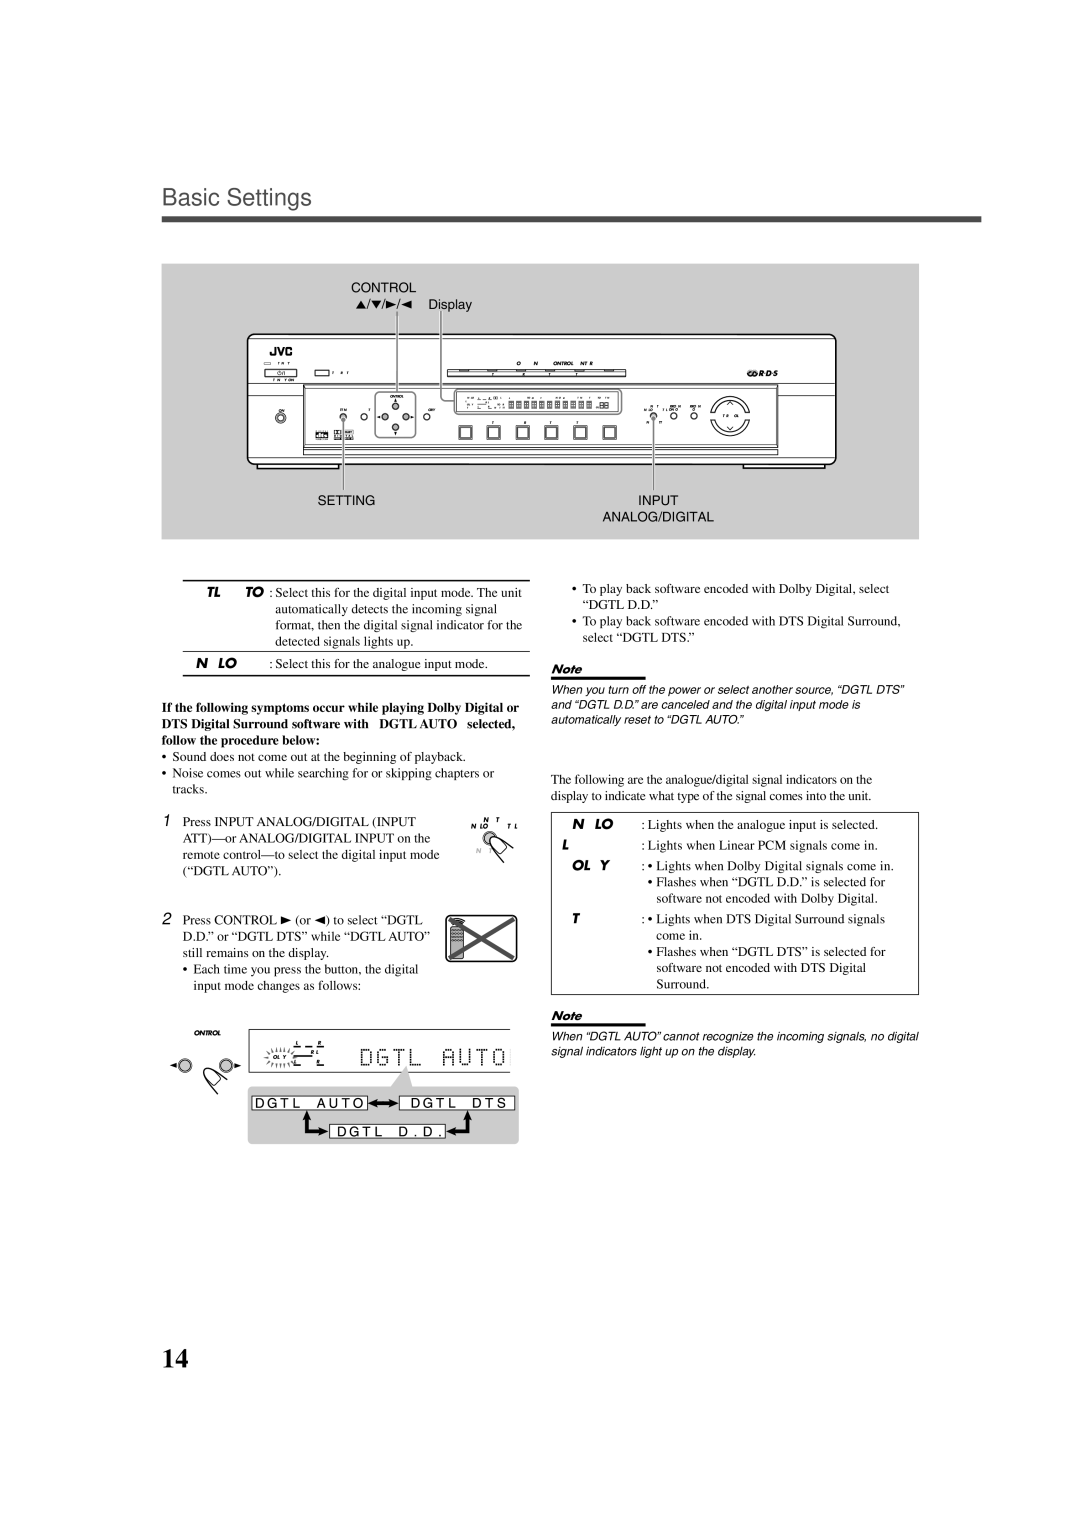 JVC LVT0858-001A manual Basic Settings, Control, ∞/ 3/ 2 Display, Setting Input ANALOG/DIGITAL, Dts 